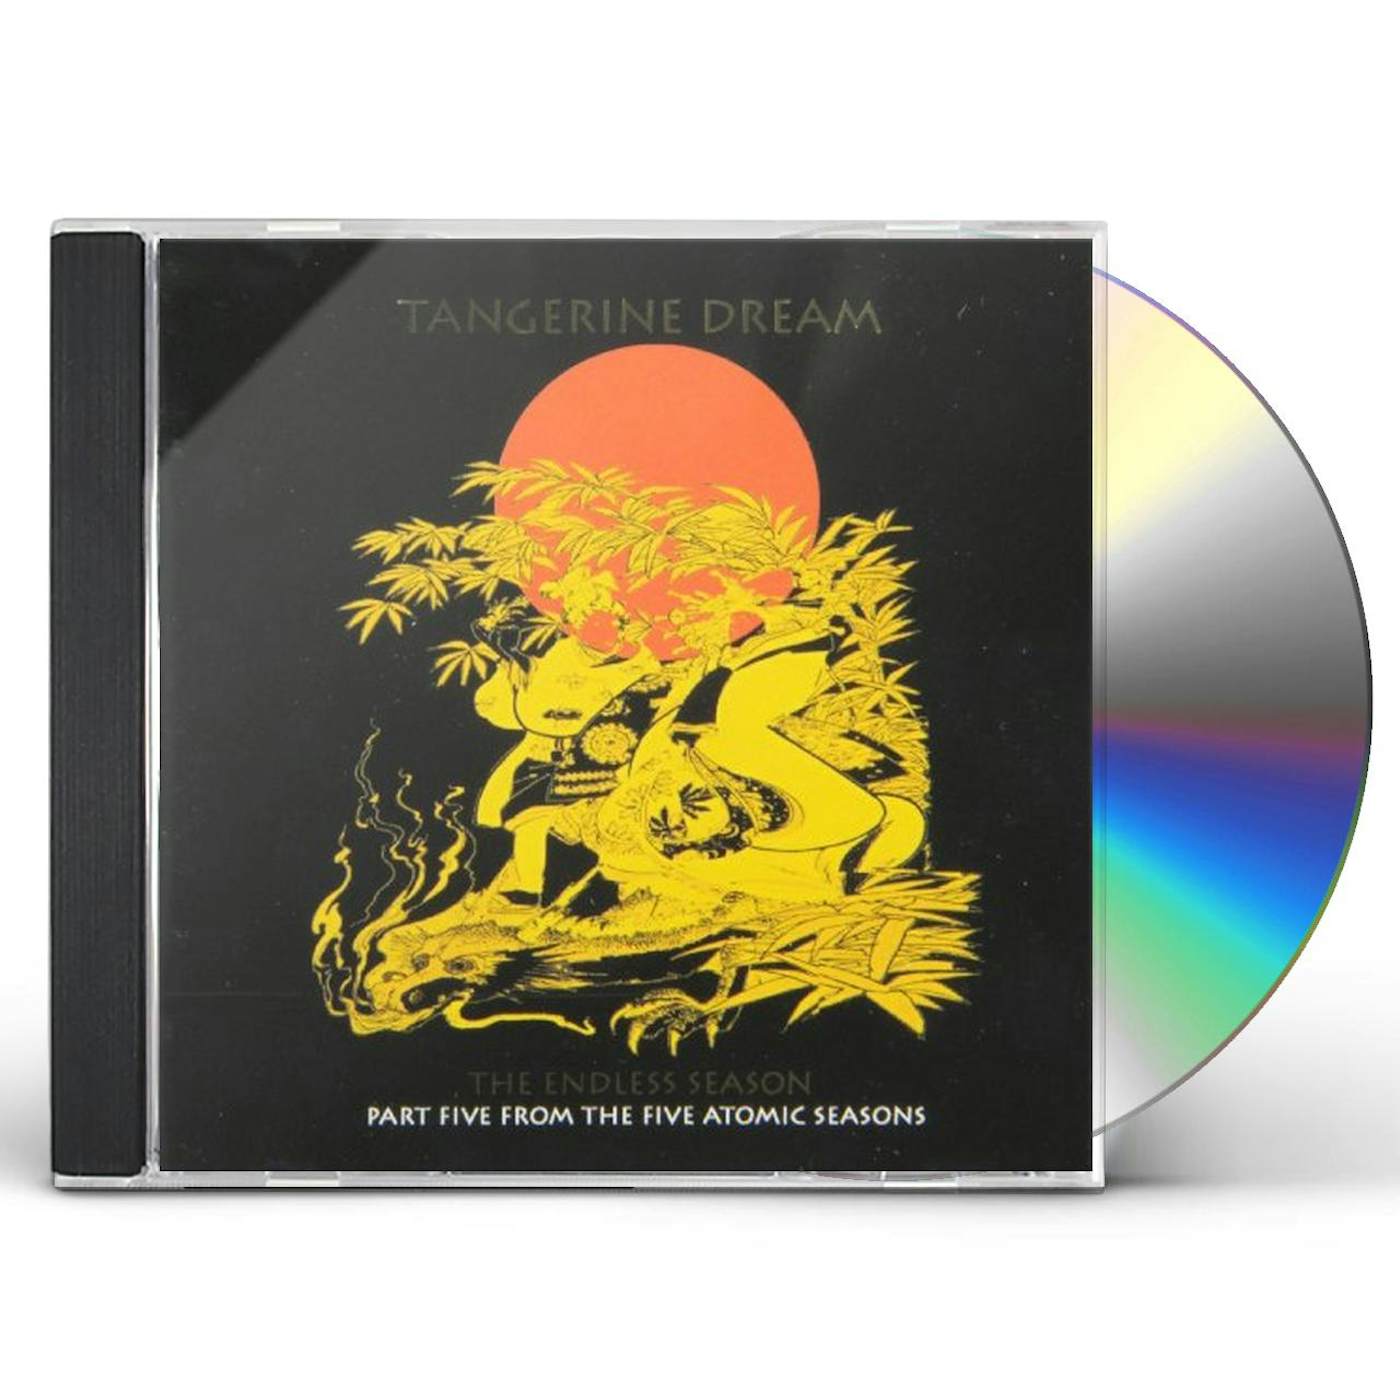 Tangerine Dream ENDLESS SEASON CD